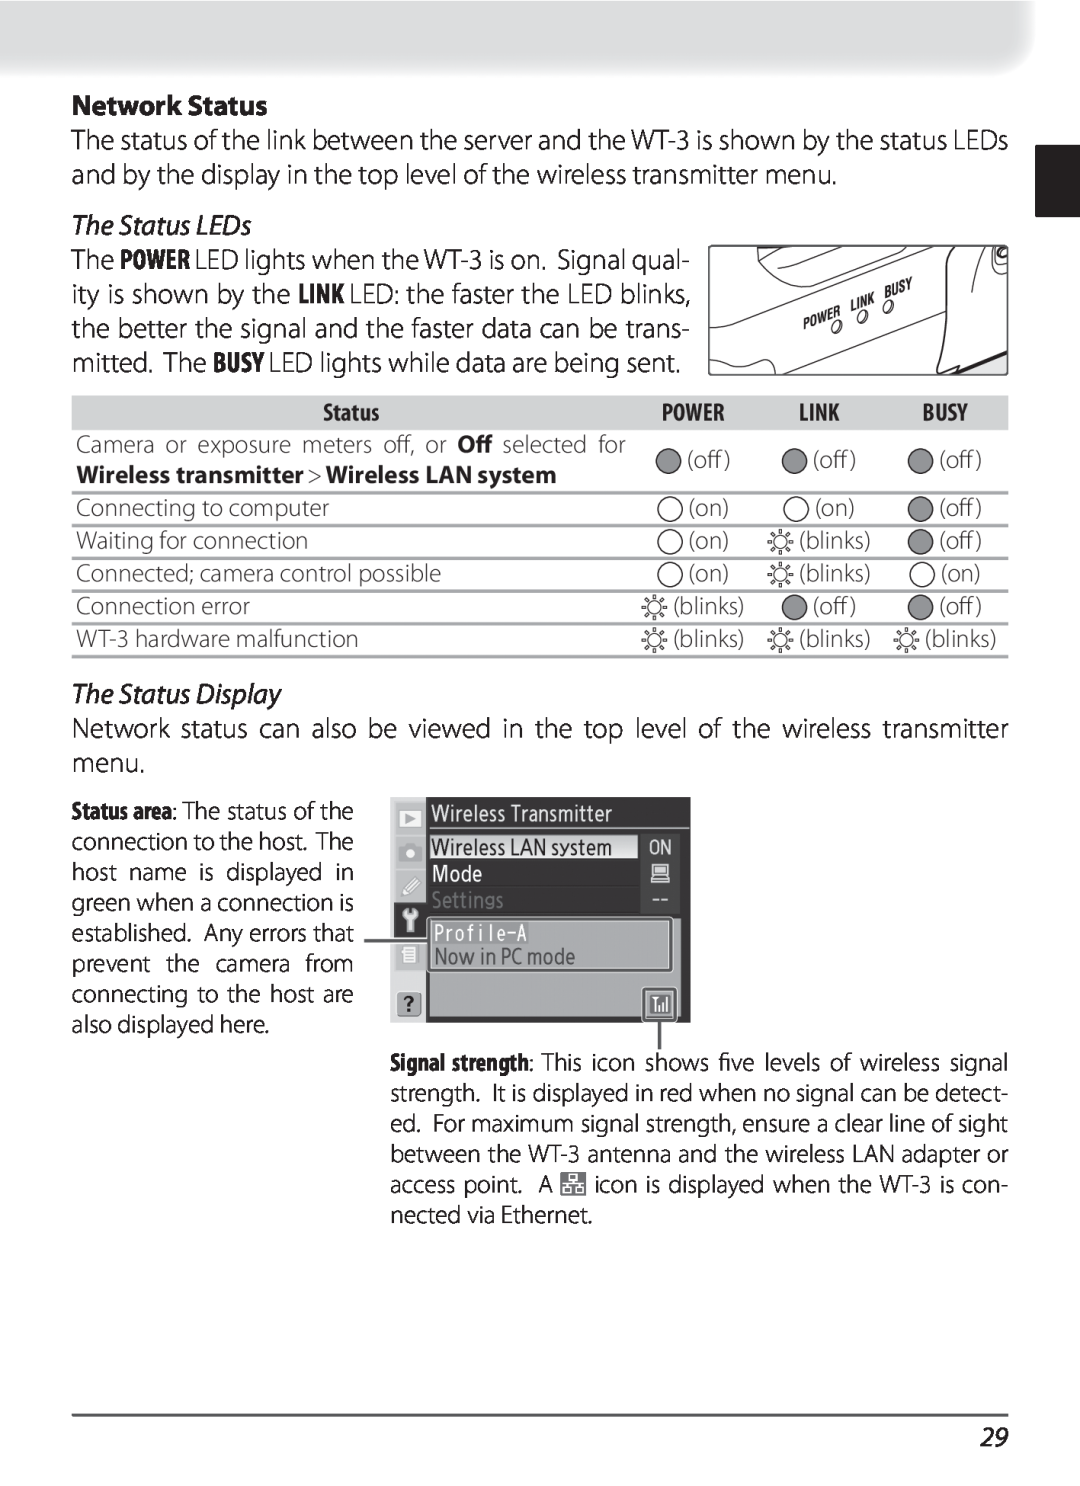 Nikon WT-3 user manual Network Status, The Status LEDs, The Status Display, Power, Link, Busy 